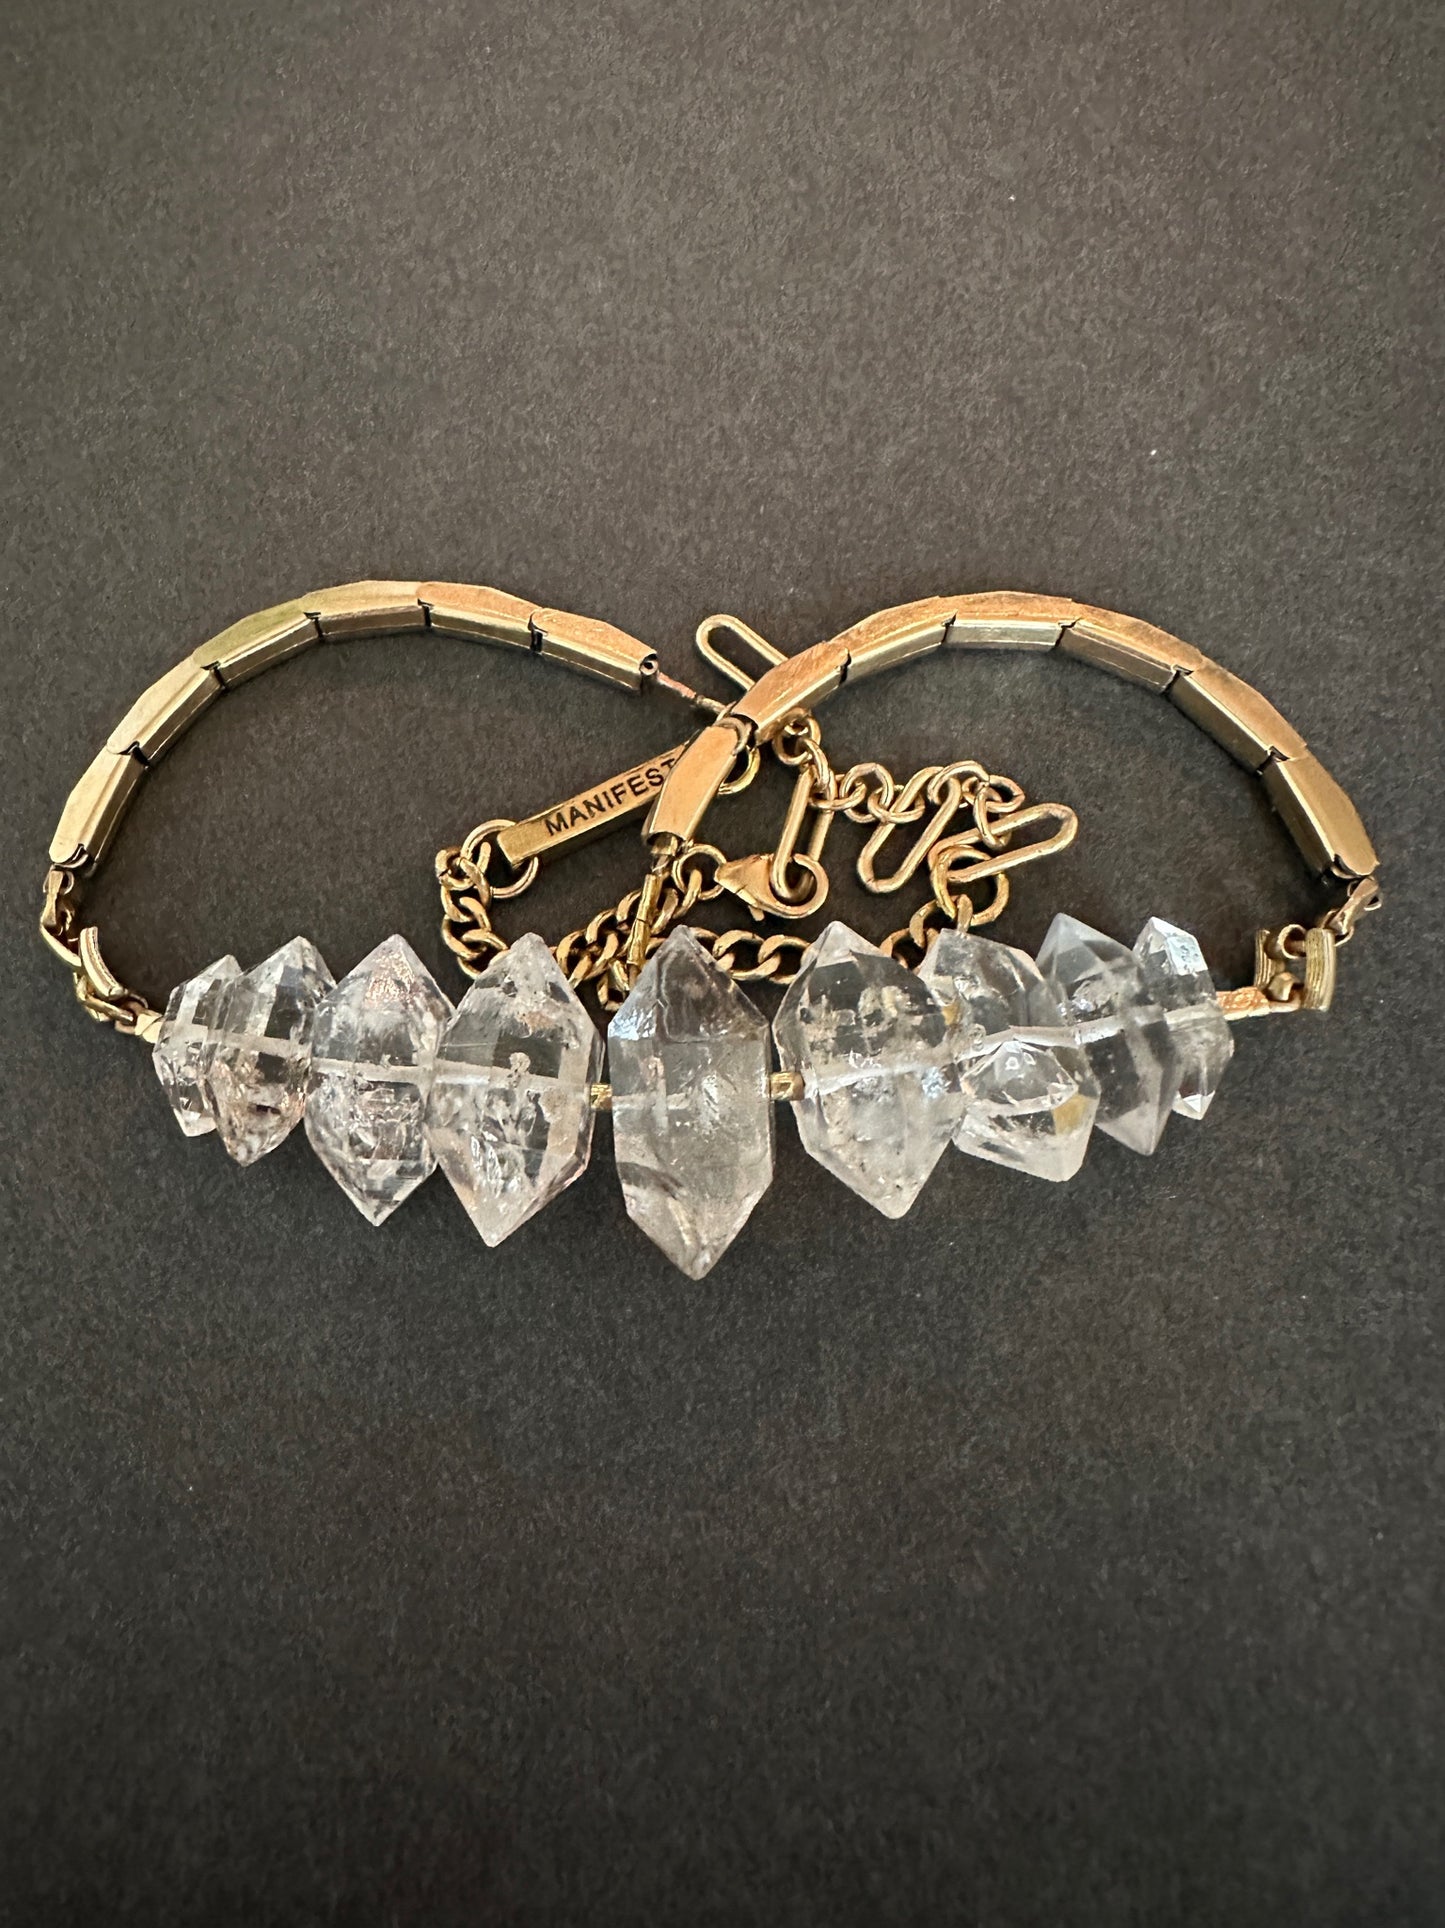 009. Goddess Herkimer Diamond Necklace